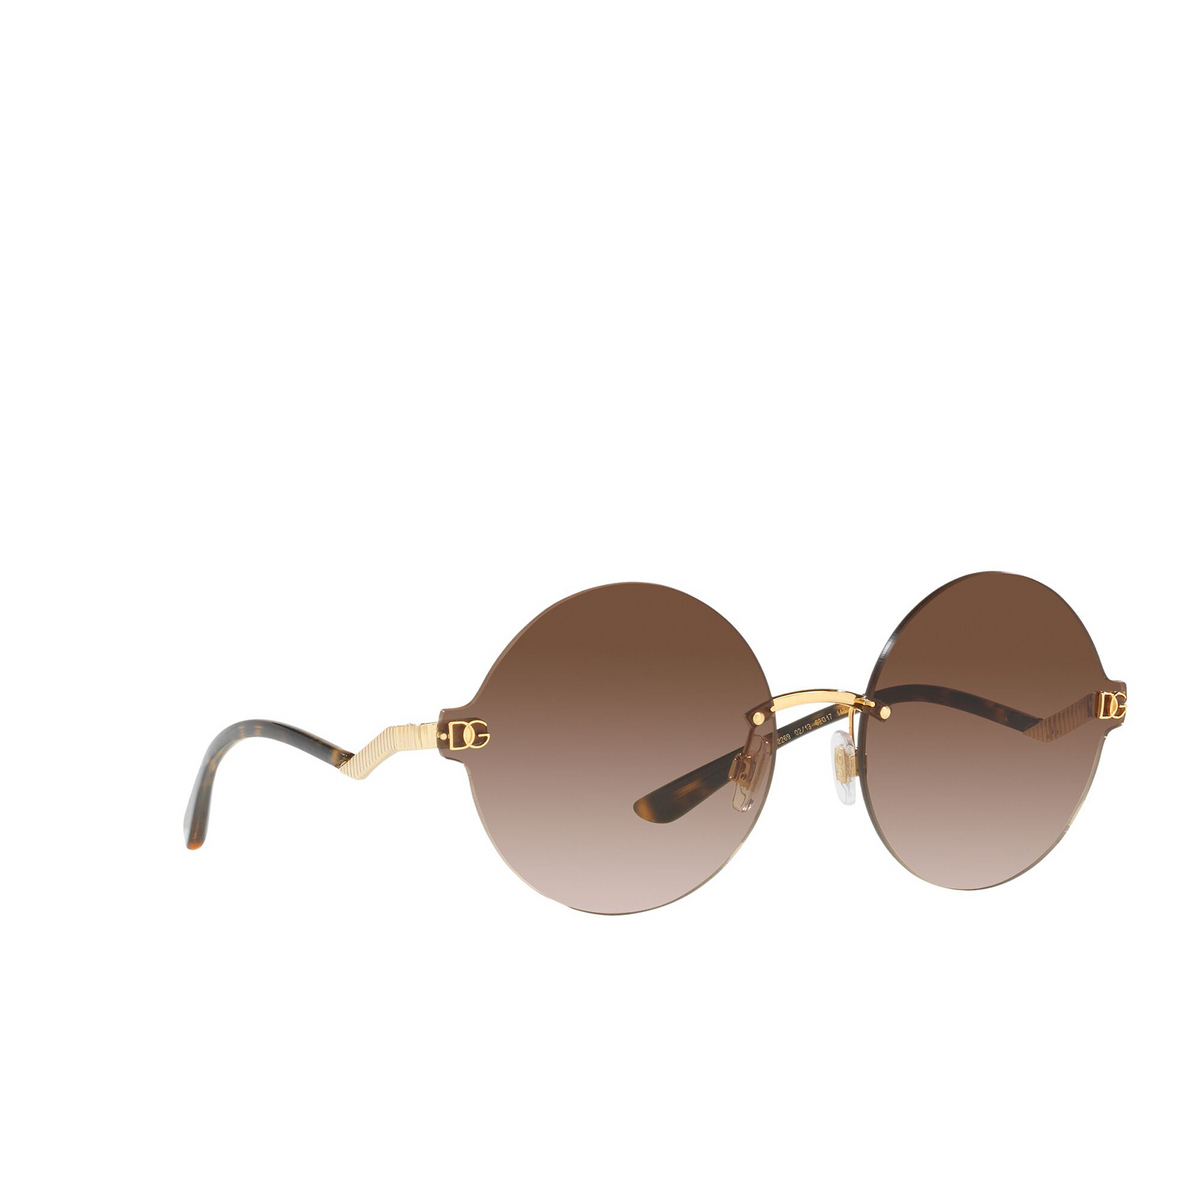 Dolce & Gabbana® Round Sunglasses: DG2269 color Gold 02/13 - three-quarters view.